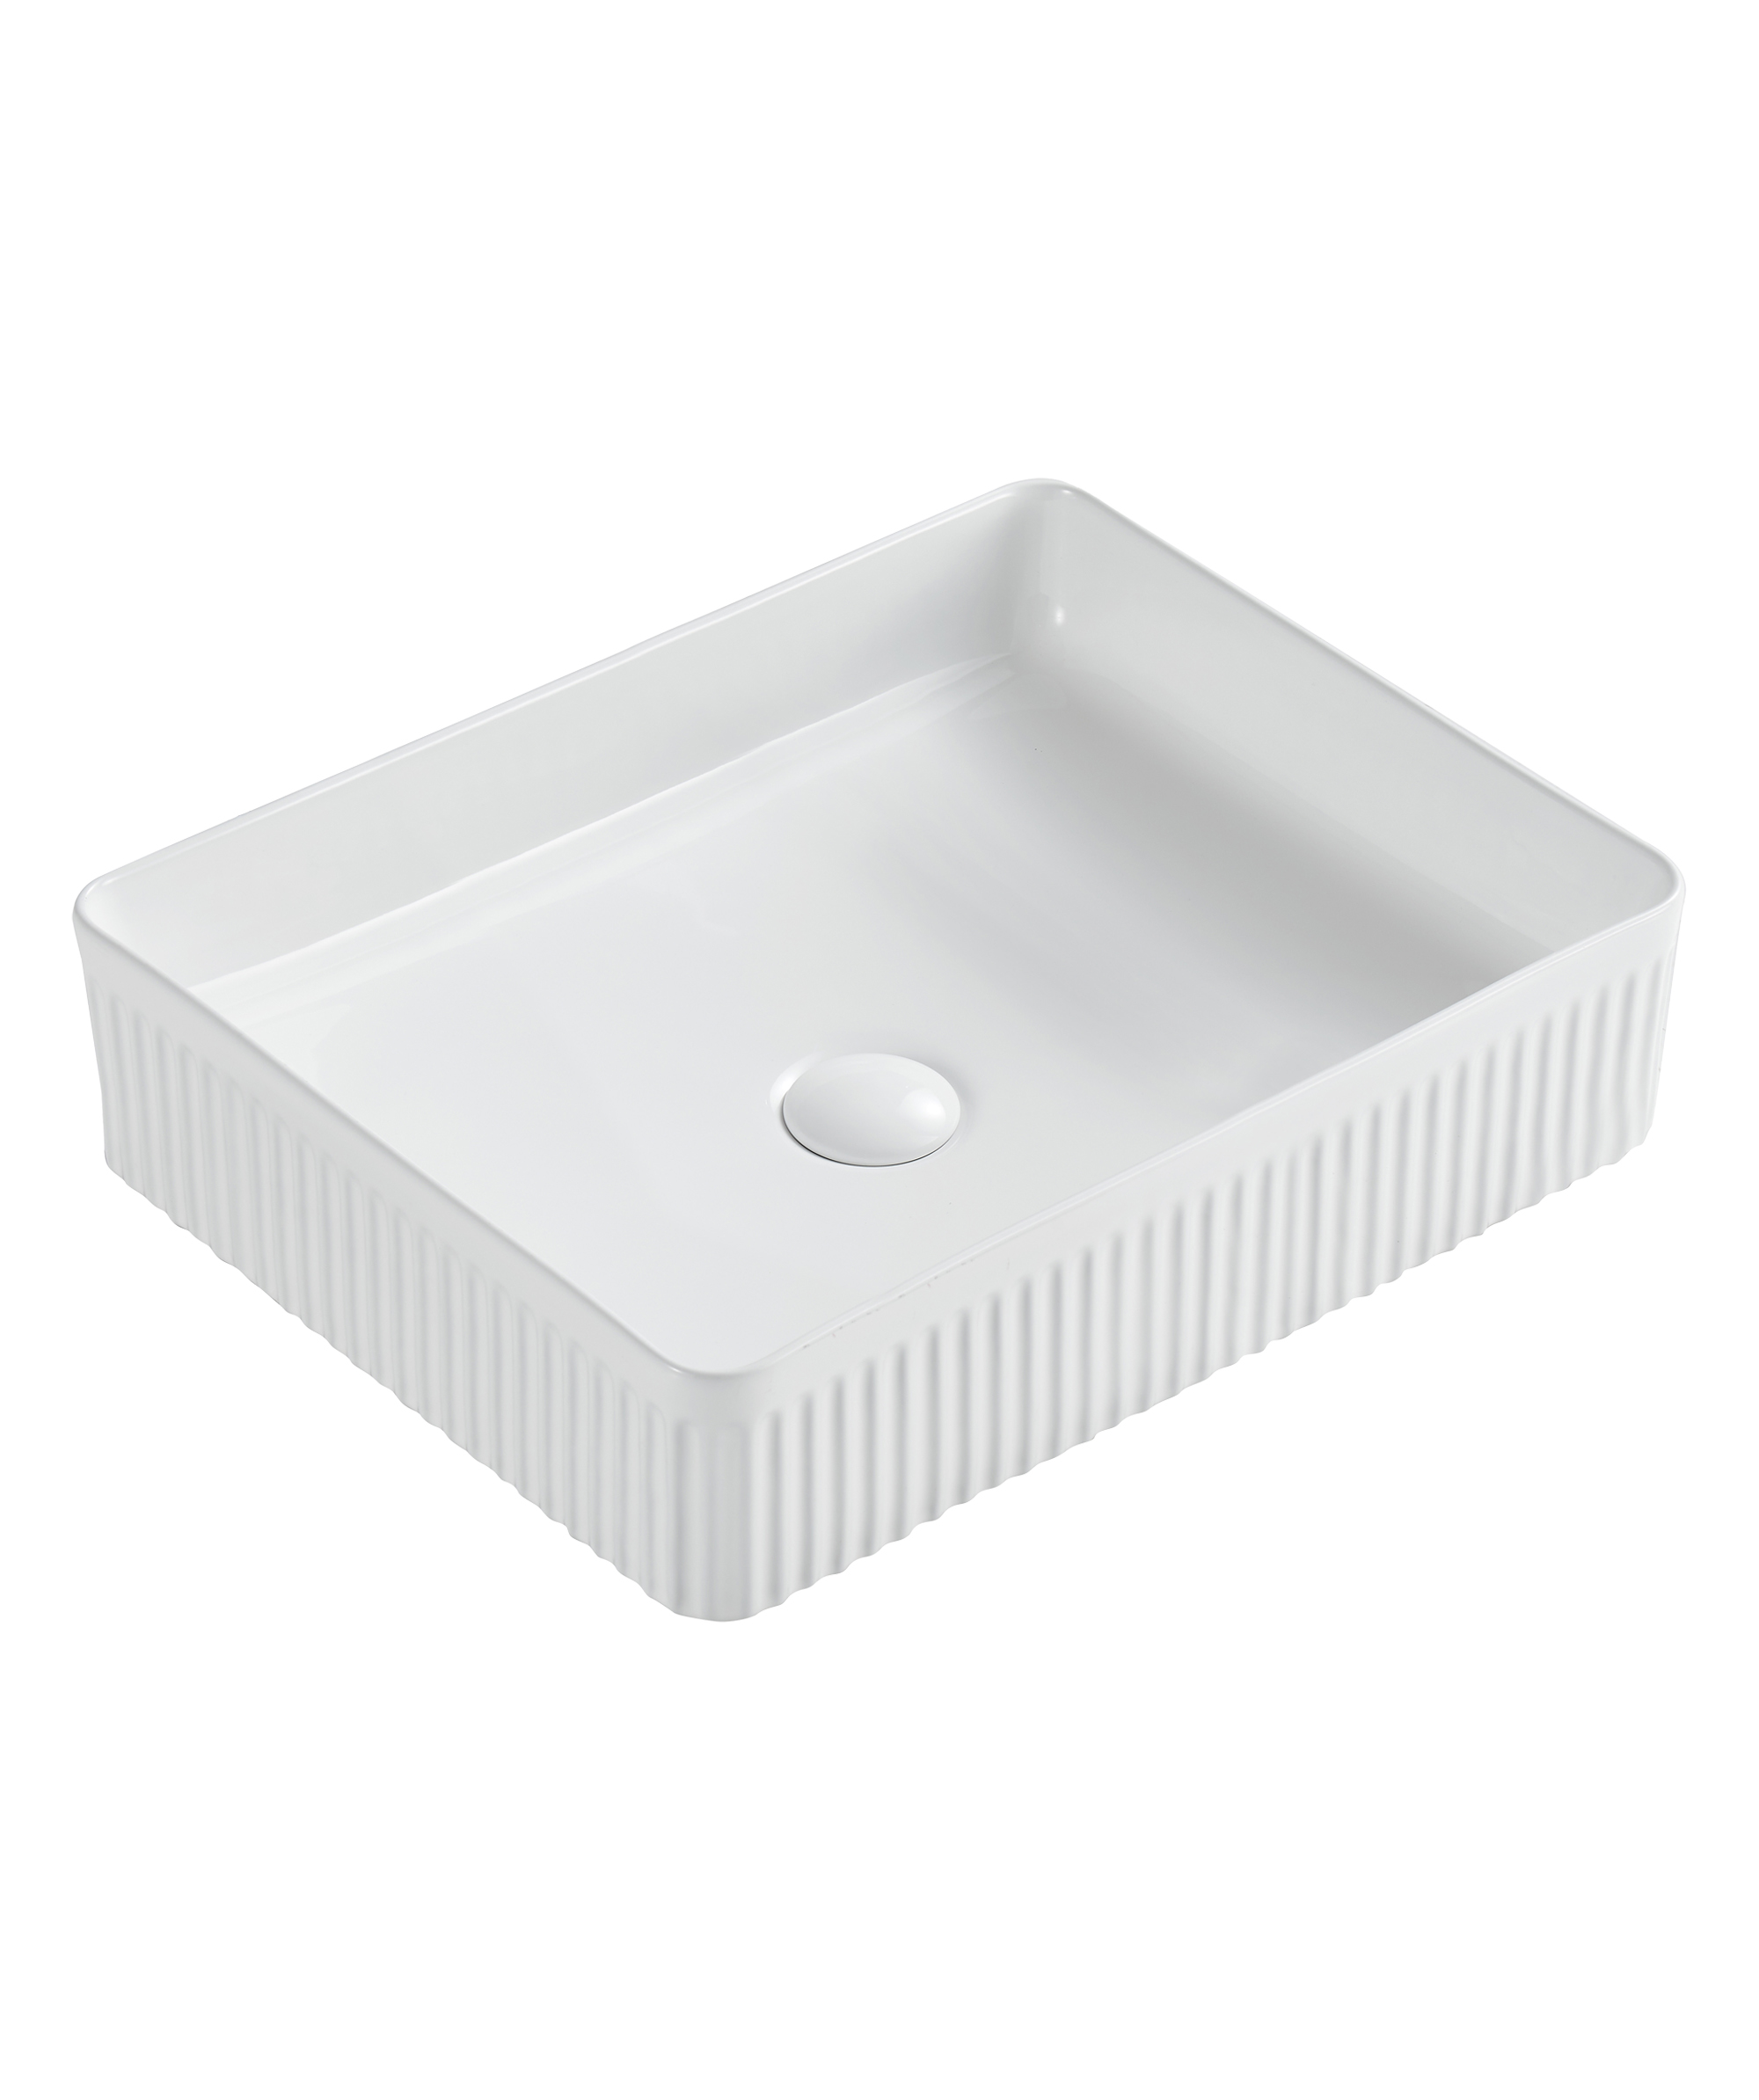 Cleo 501 ceramic basin - White Gloss